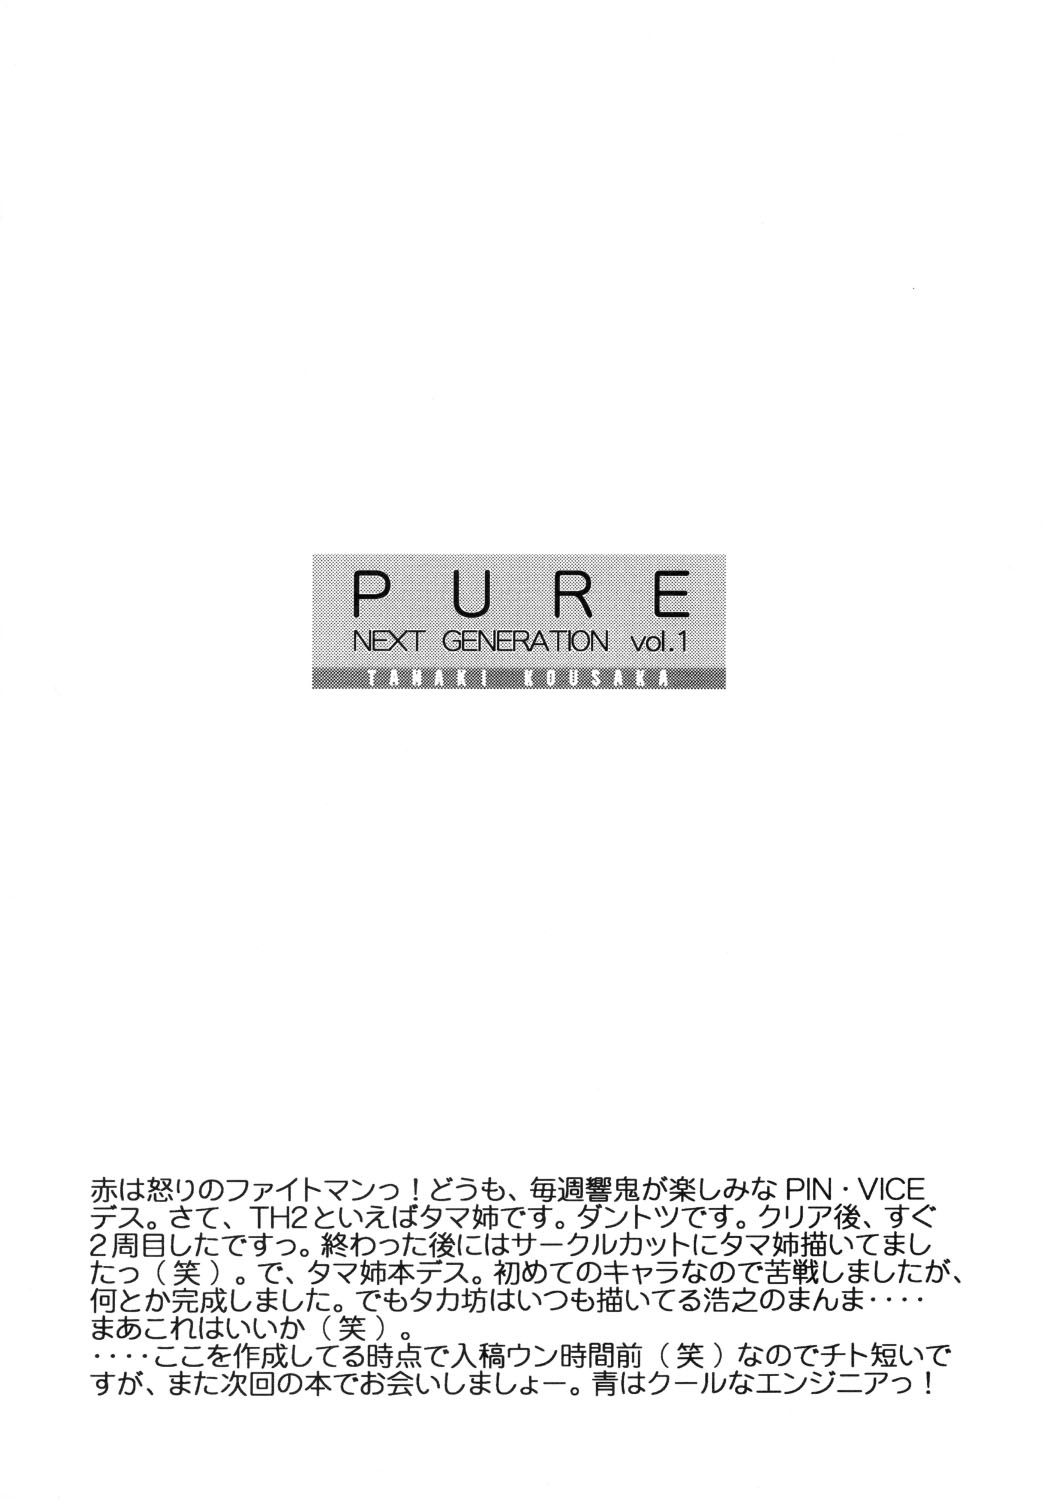 [下僕出版] PURE NEXT GENERATION vol.1 (ToHeart2) 